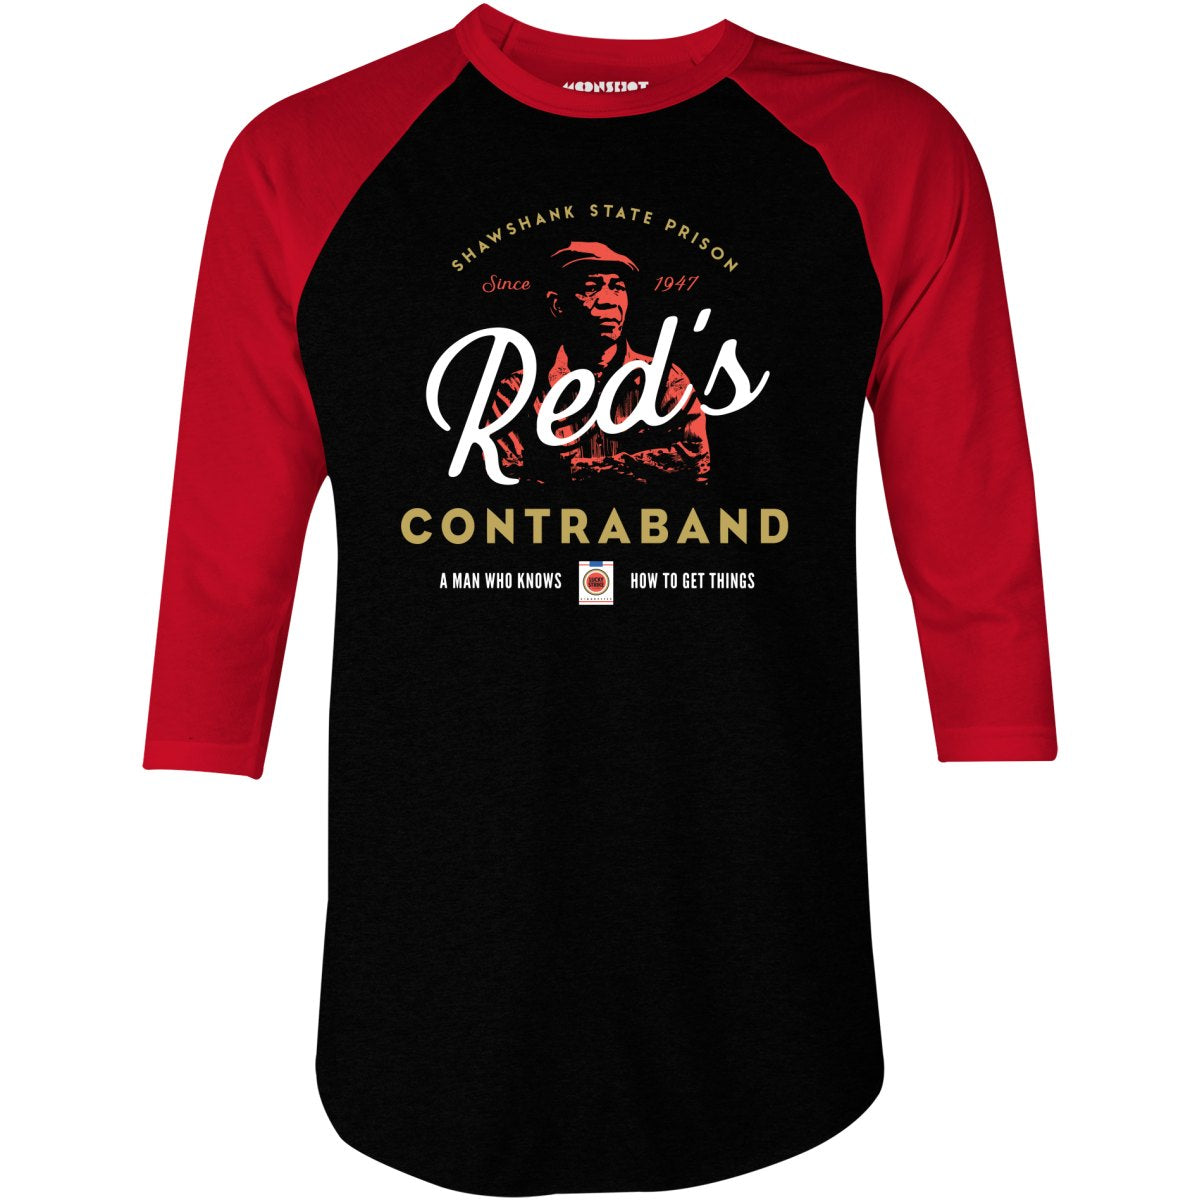 Red's Contraband - 3/4 Sleeve Raglan T-Shirt